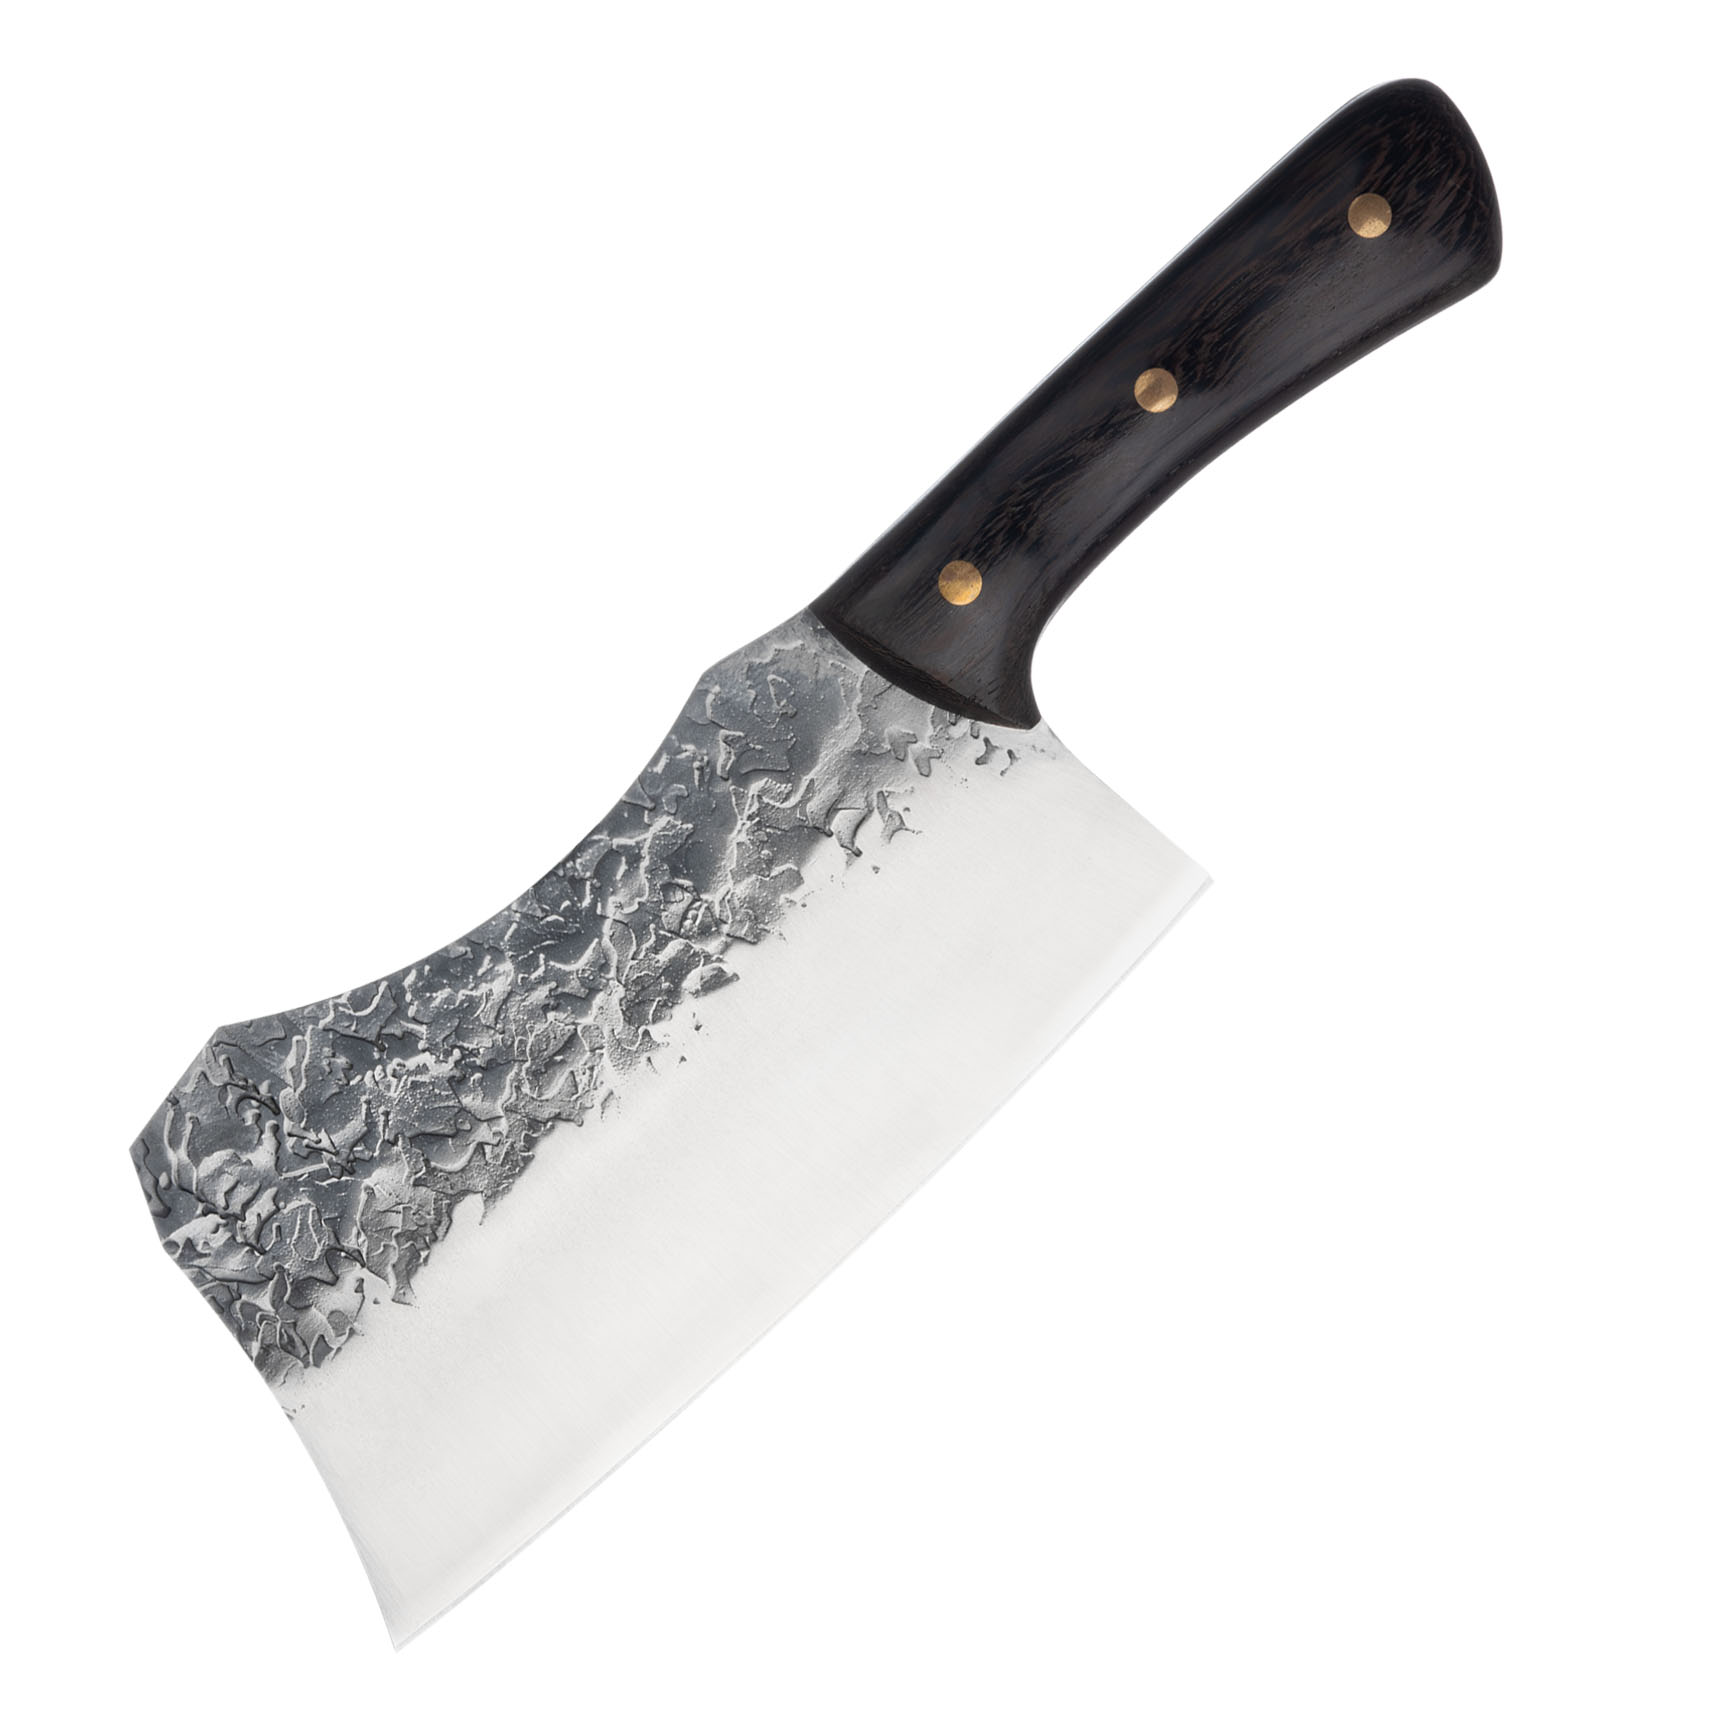 Paofu 8" Forged Japanese Butcher Knife Black